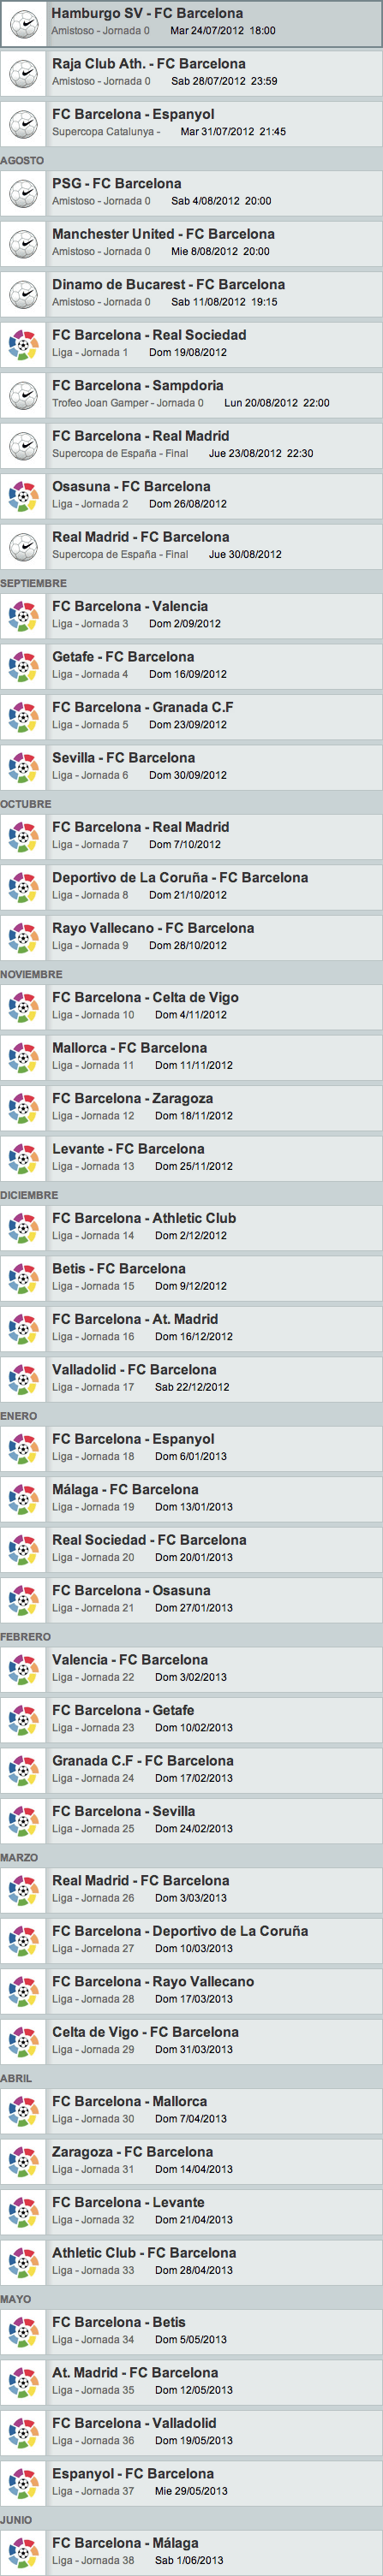 Calendario de partidos del Barcelona 2013-2013